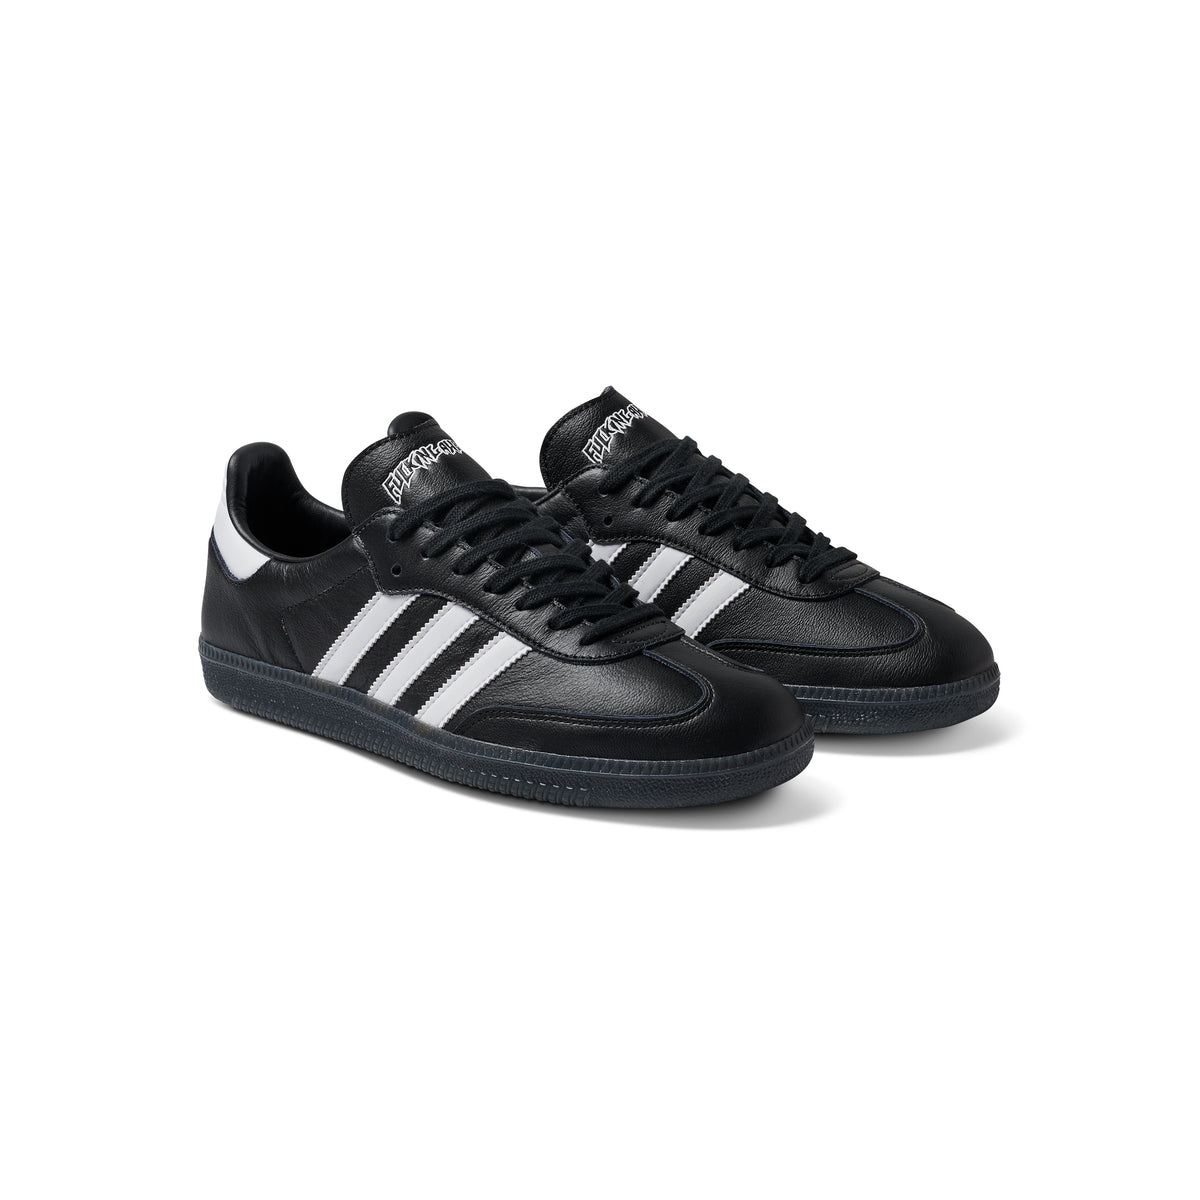 Adidas FA Samba - Black / Black / White